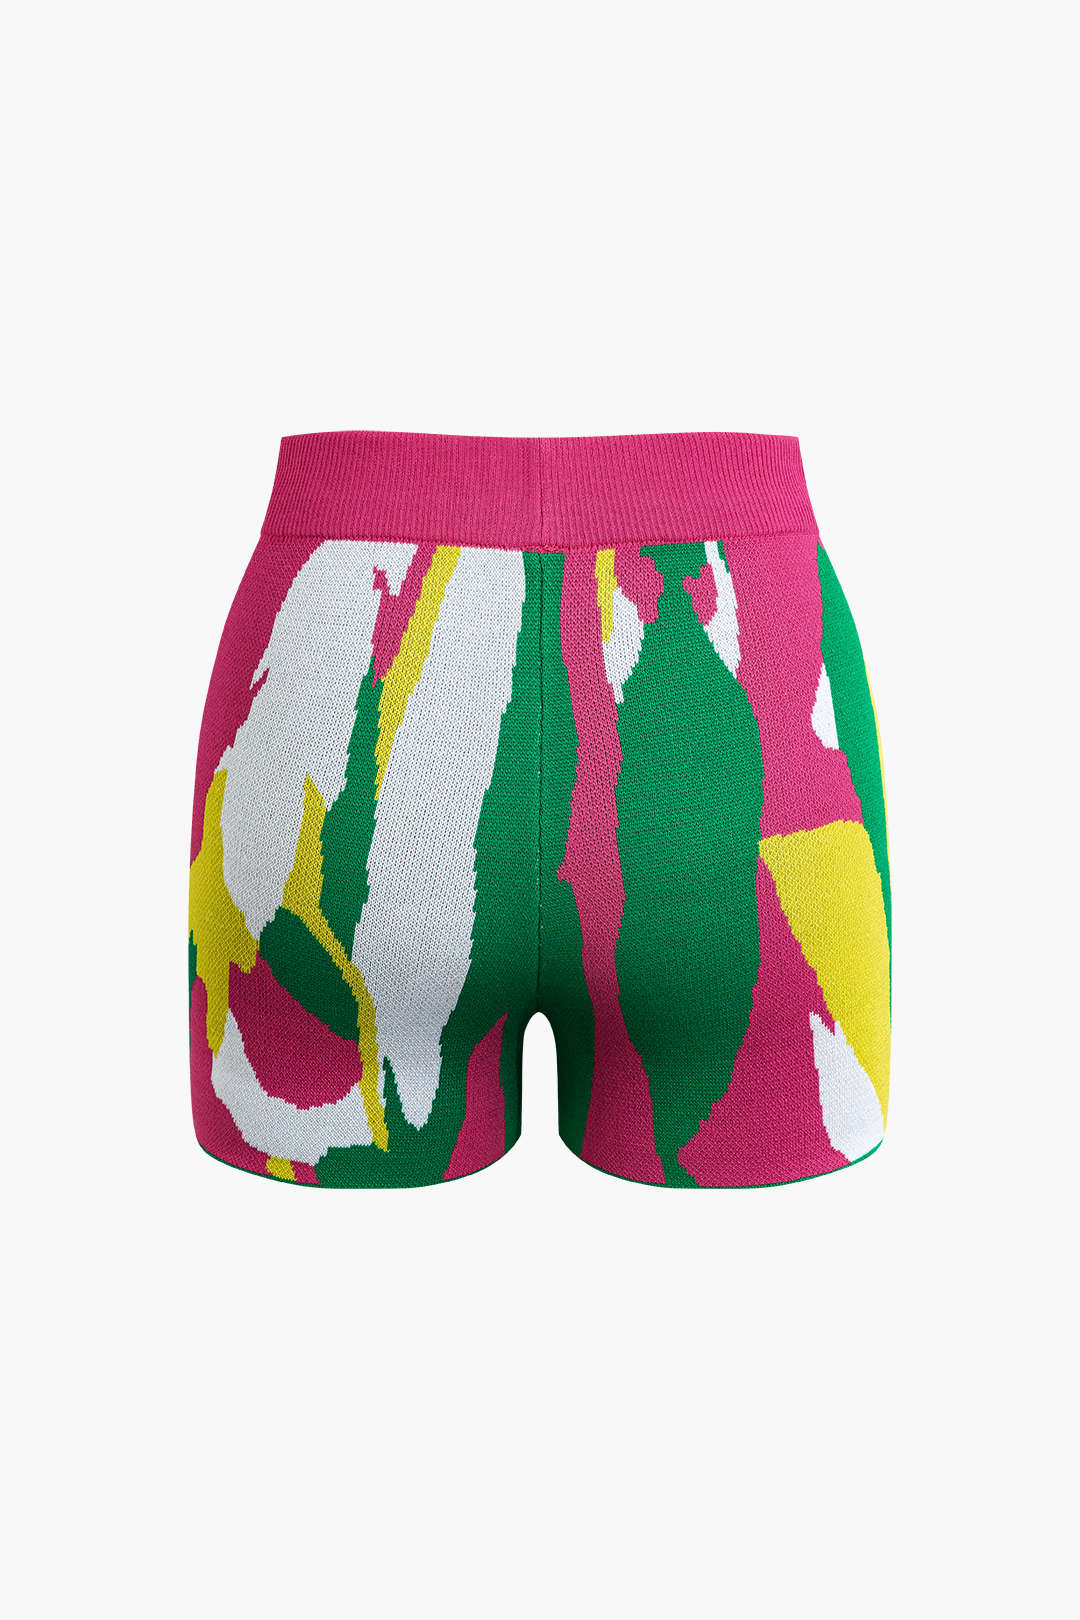 Color Block Knit Cami Top And Shorts Set